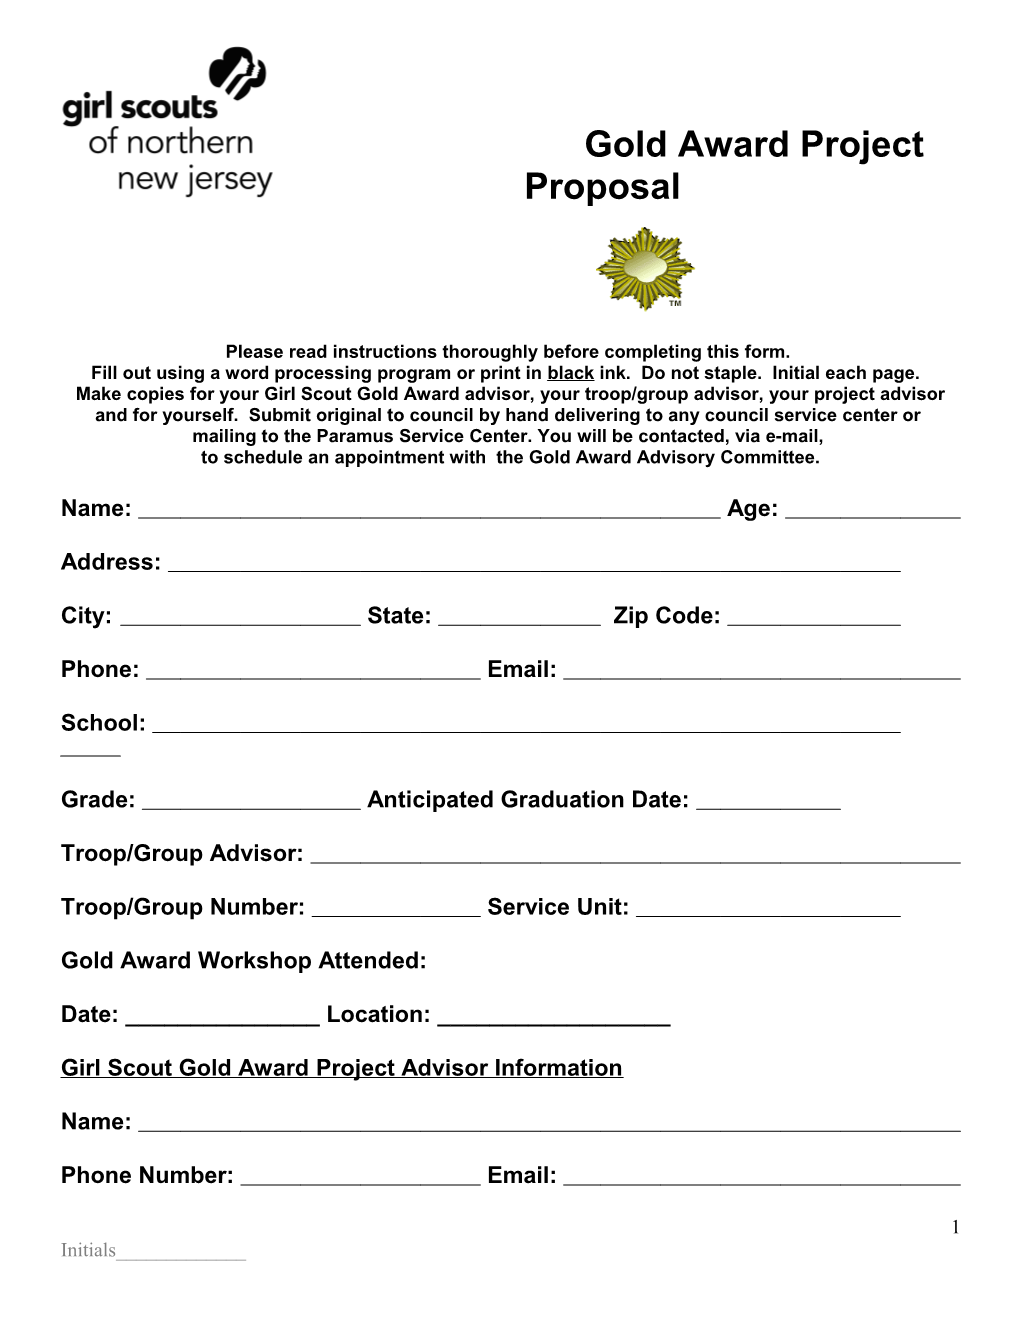 Gold Award Project Proposal